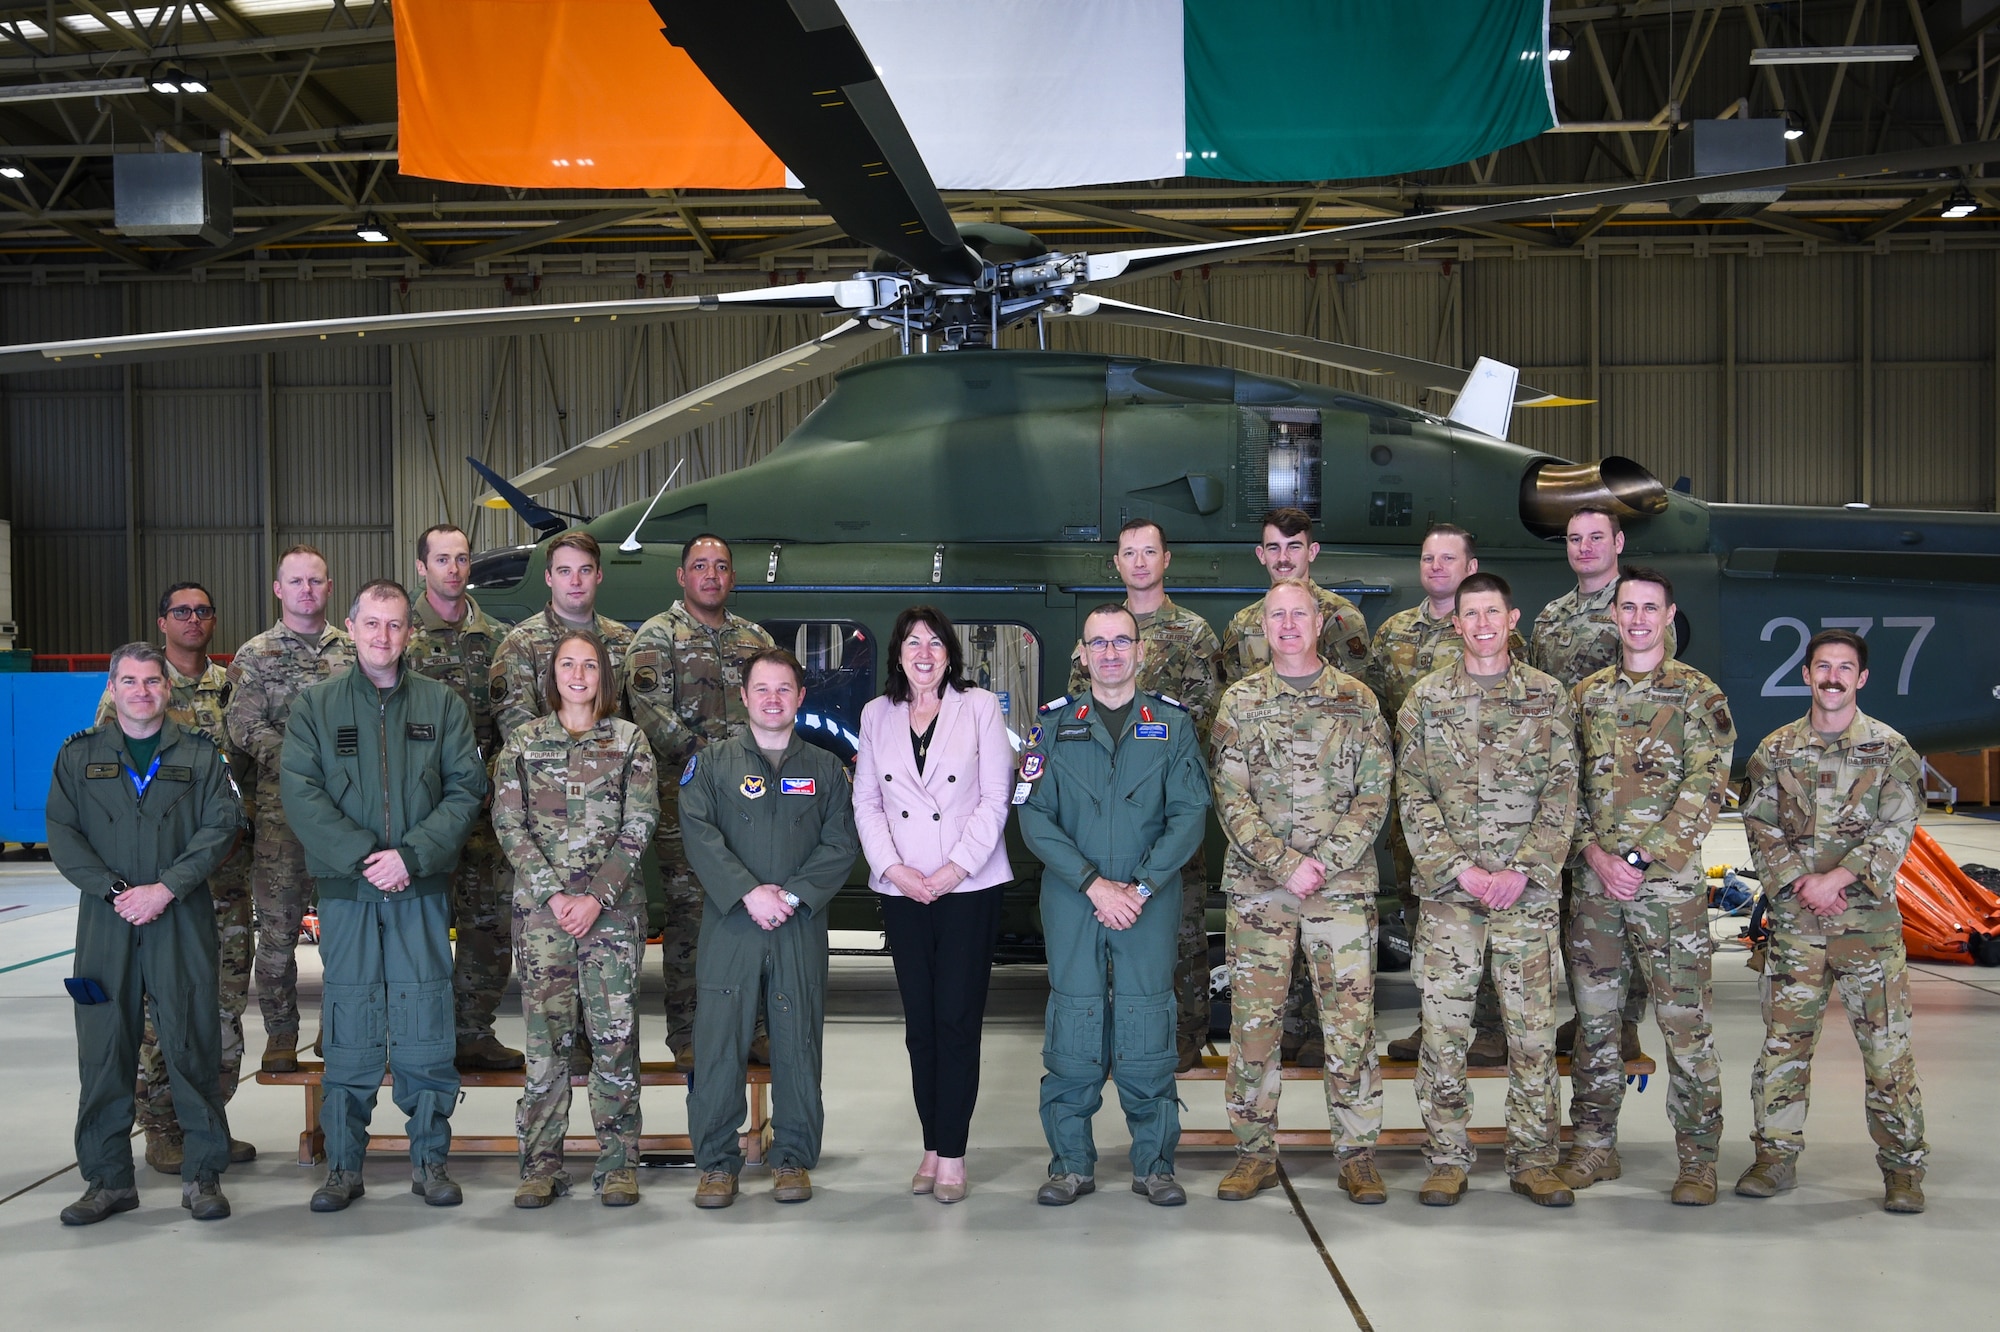 Group photo of 20 AF team and Irish team